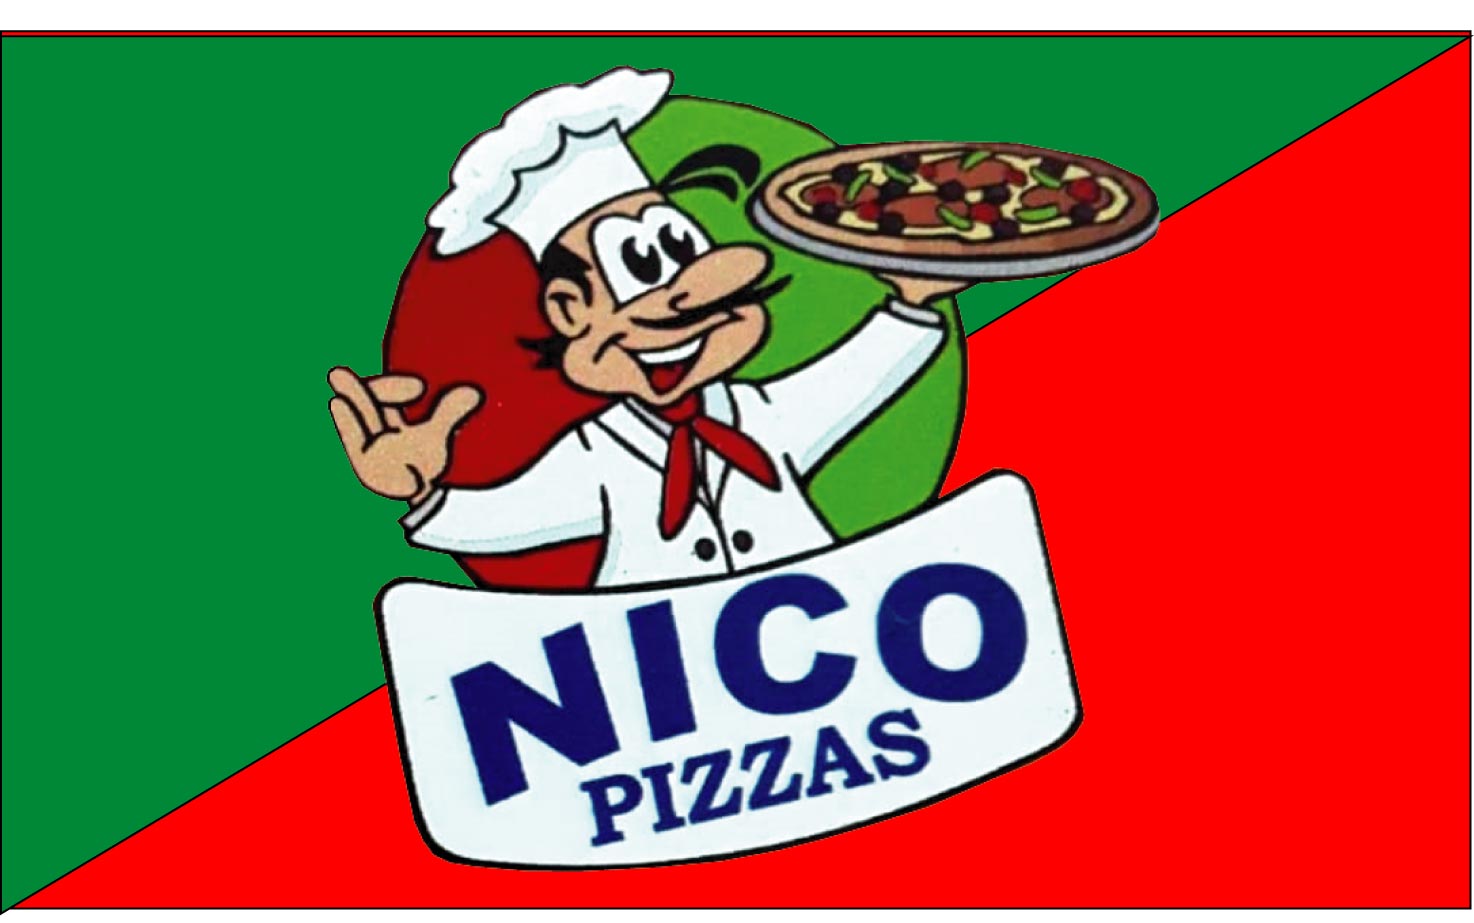 Pizzas Nico